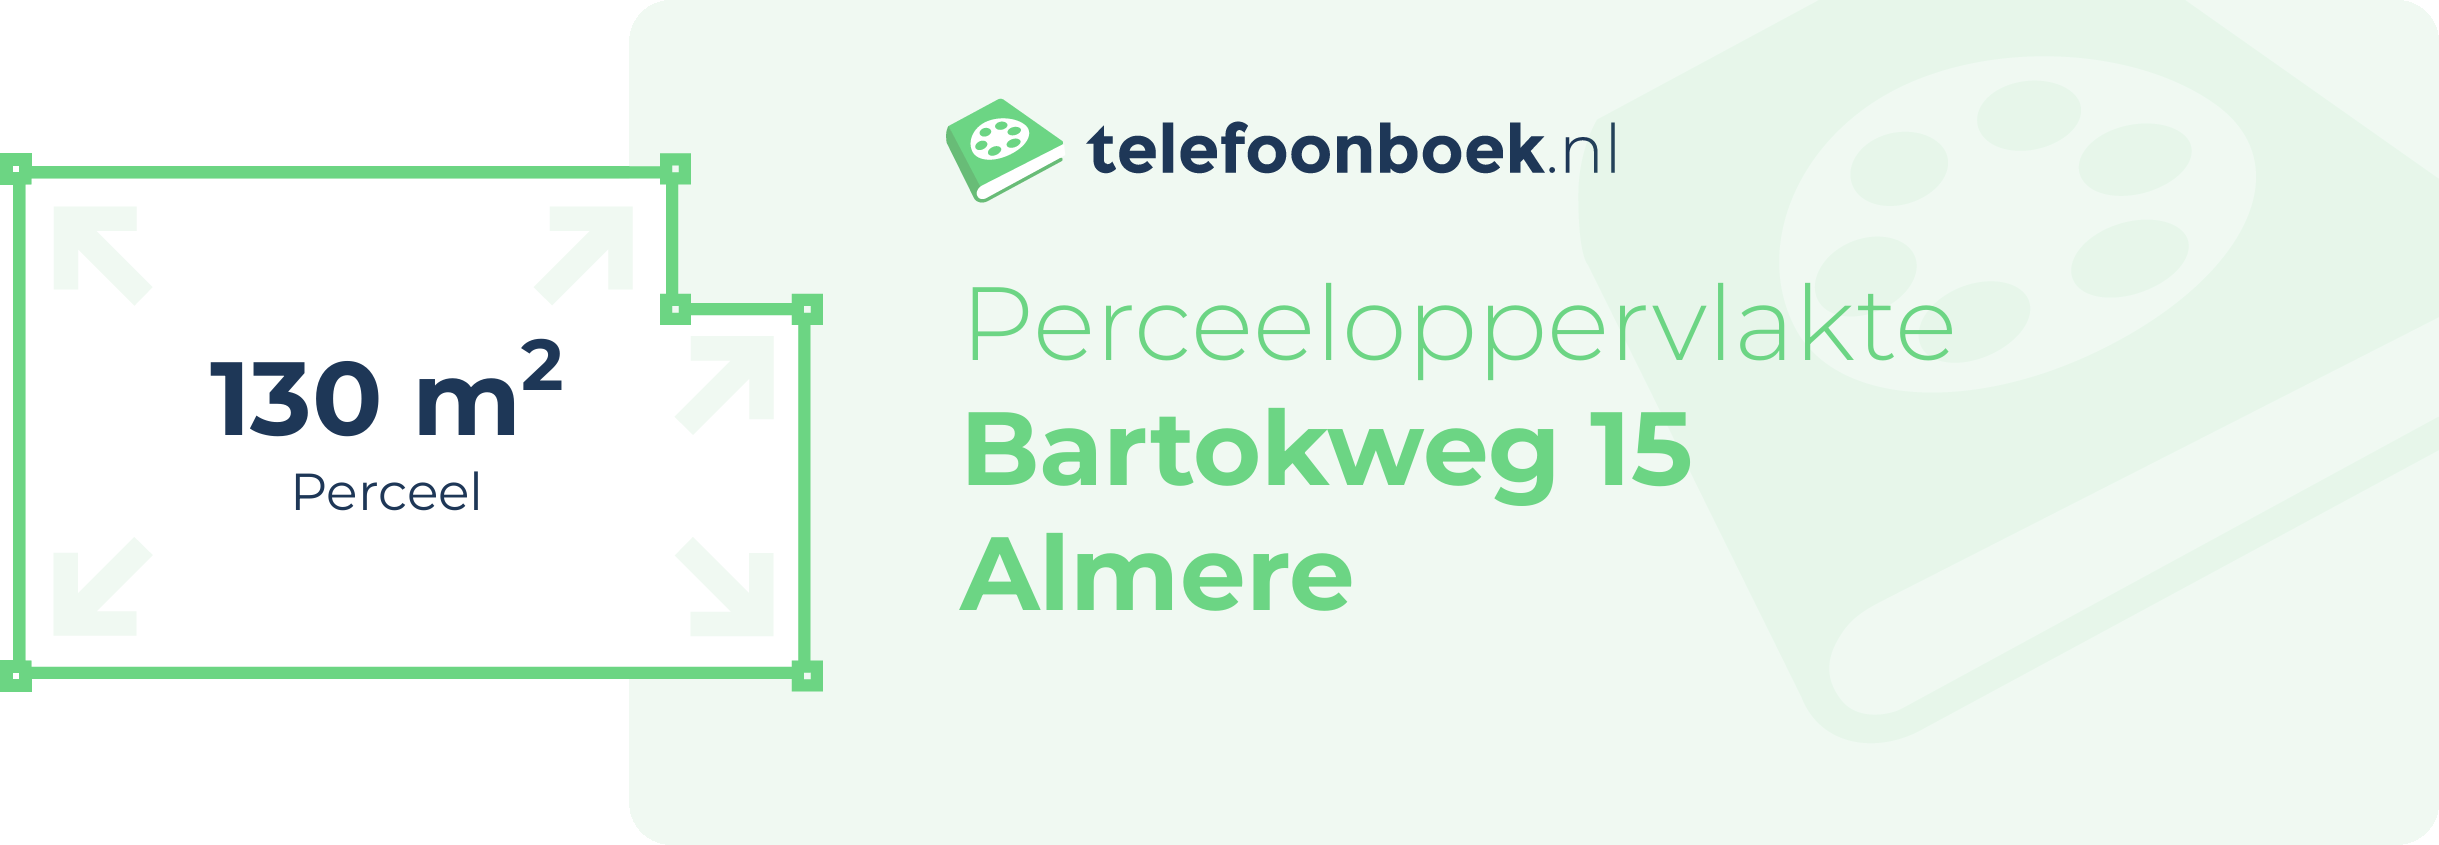 Perceeloppervlakte Bartokweg 15 Almere